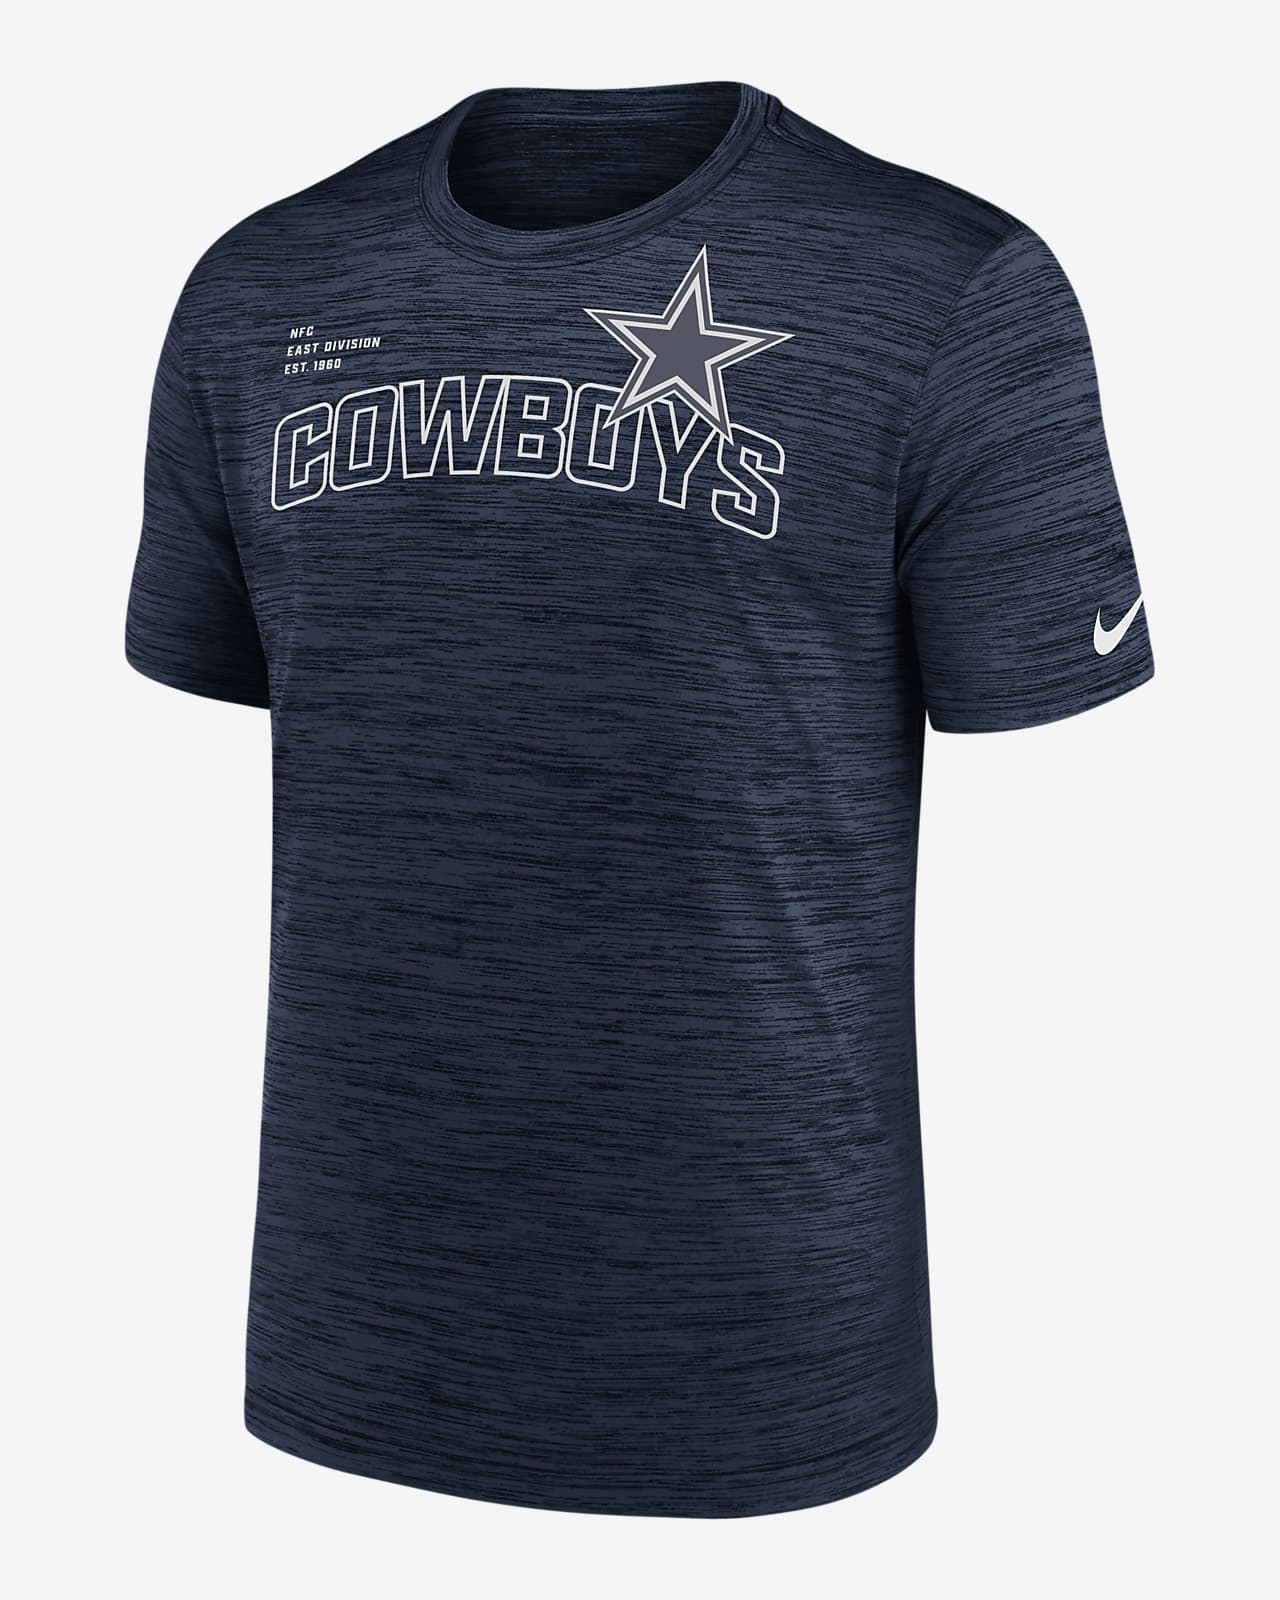 Dallas Cowboys Velocity Arch Men's Nike NFL T-Shirt.